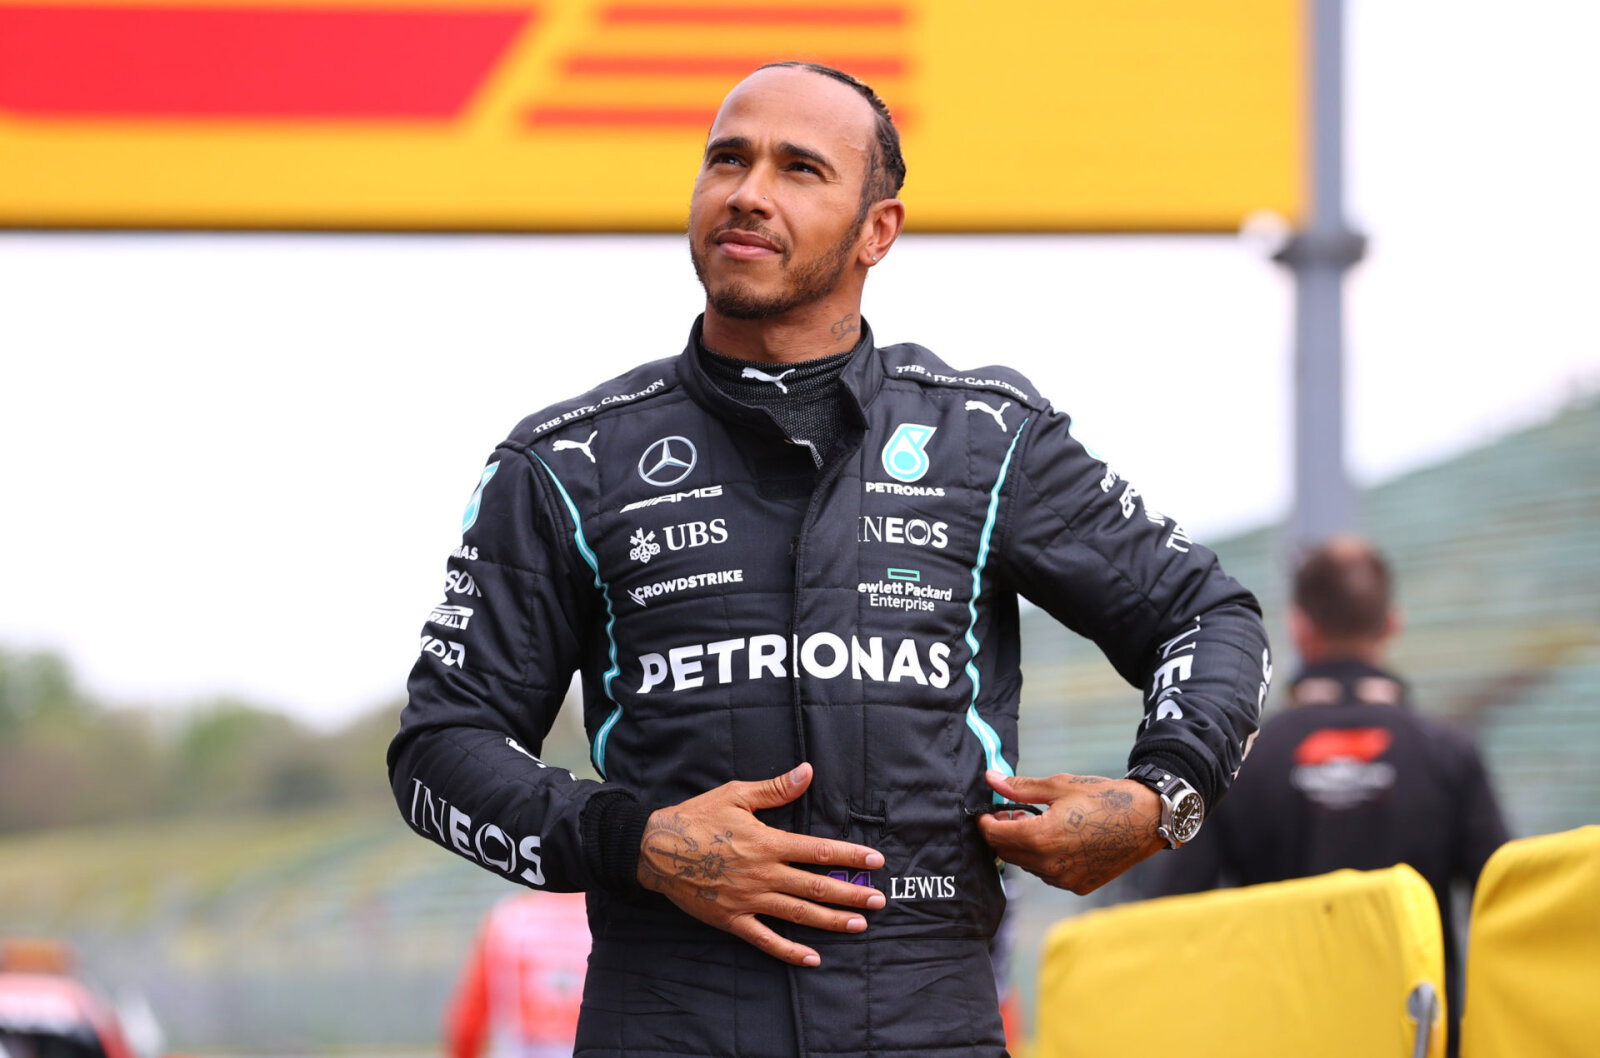 Marko wants Hamilton suspended for the next race